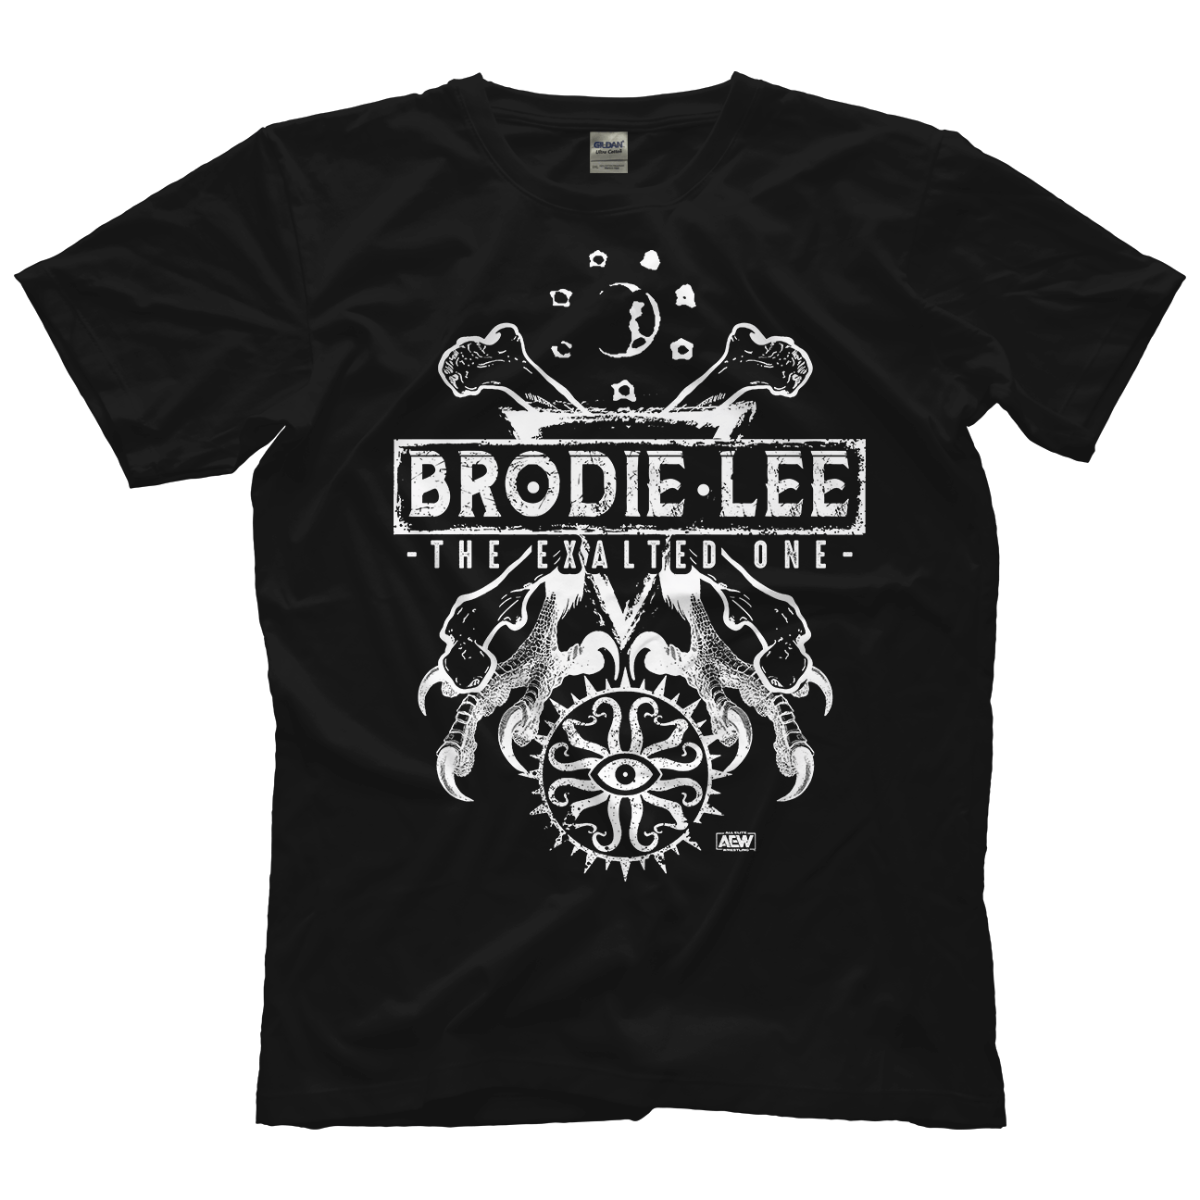 Brodie Lee Enlightenment Revealed Shirt